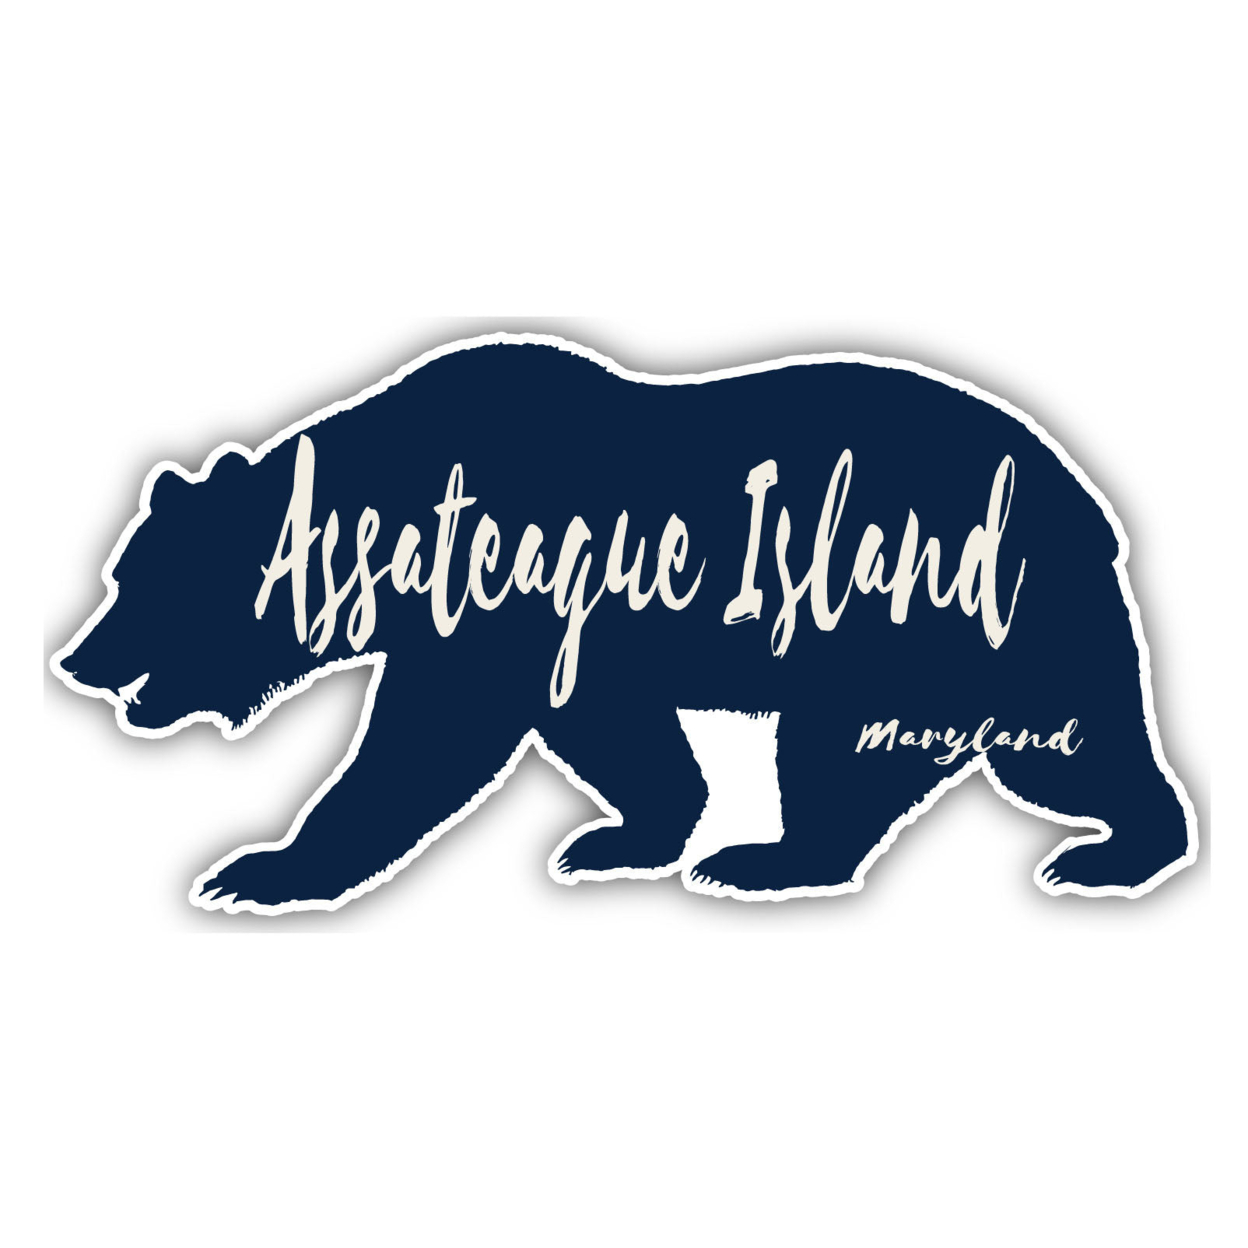 Assateague Island Maryland Souvenir Decorative Stickers (Choose Theme And Size) - Single Unit, 4-Inch, Bear